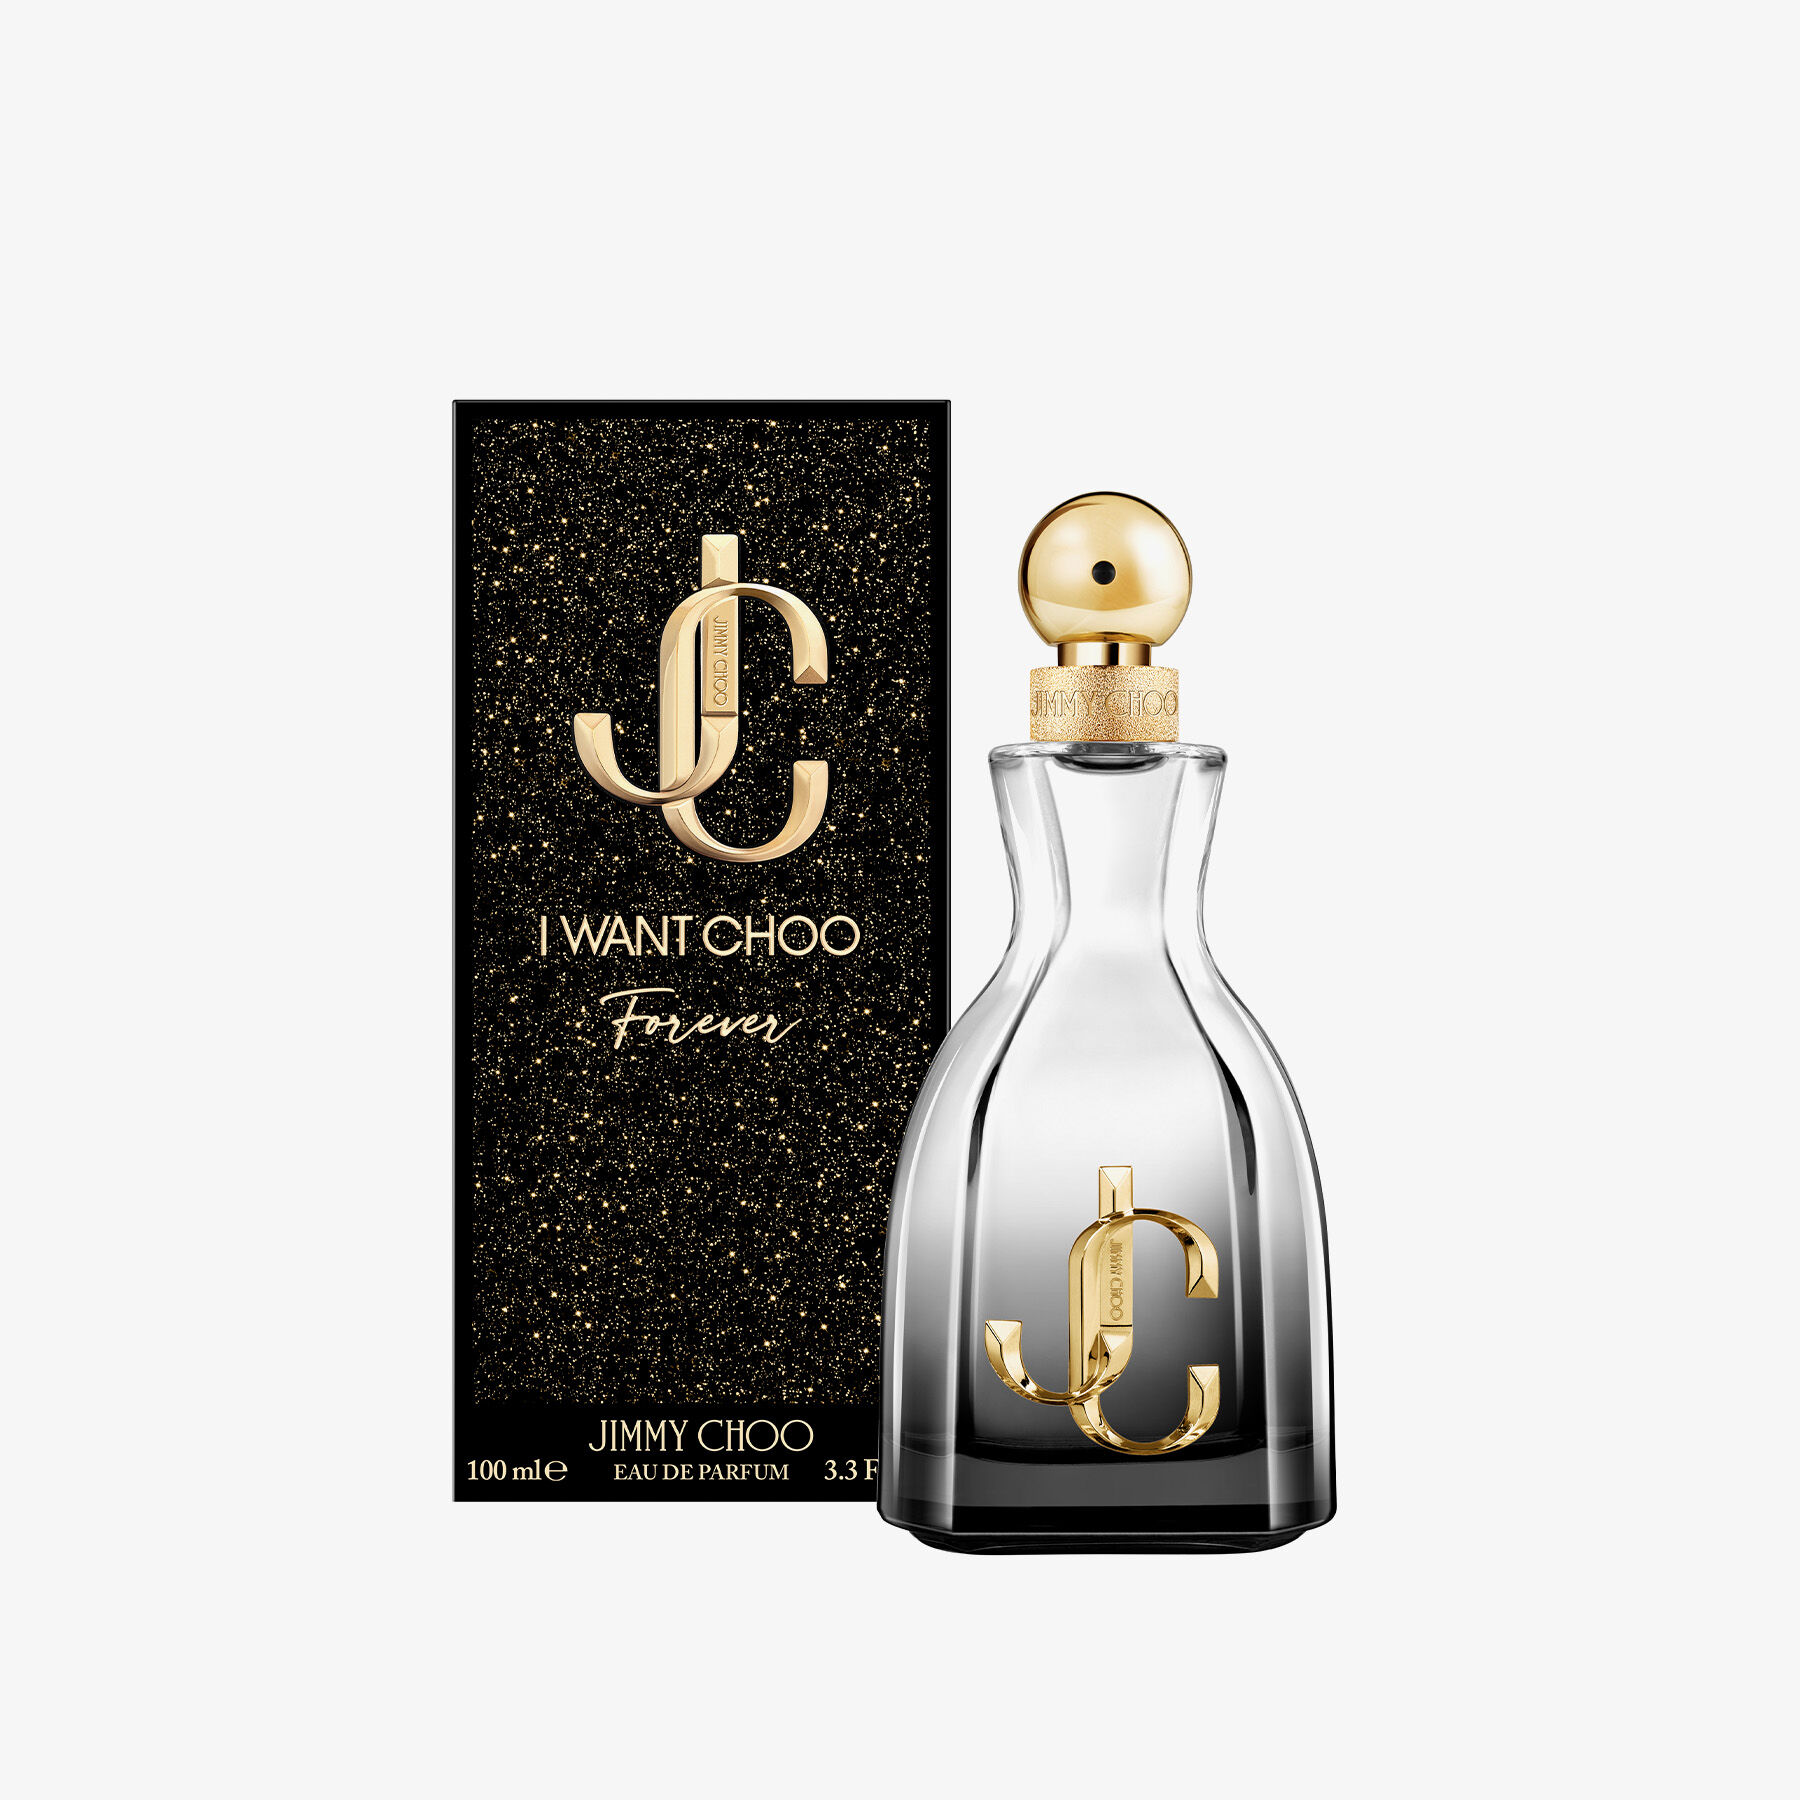 Jimmy Choo I Want Choo Forever Eau De Parfum 100ml | Fragrance | JIMMY CHOO